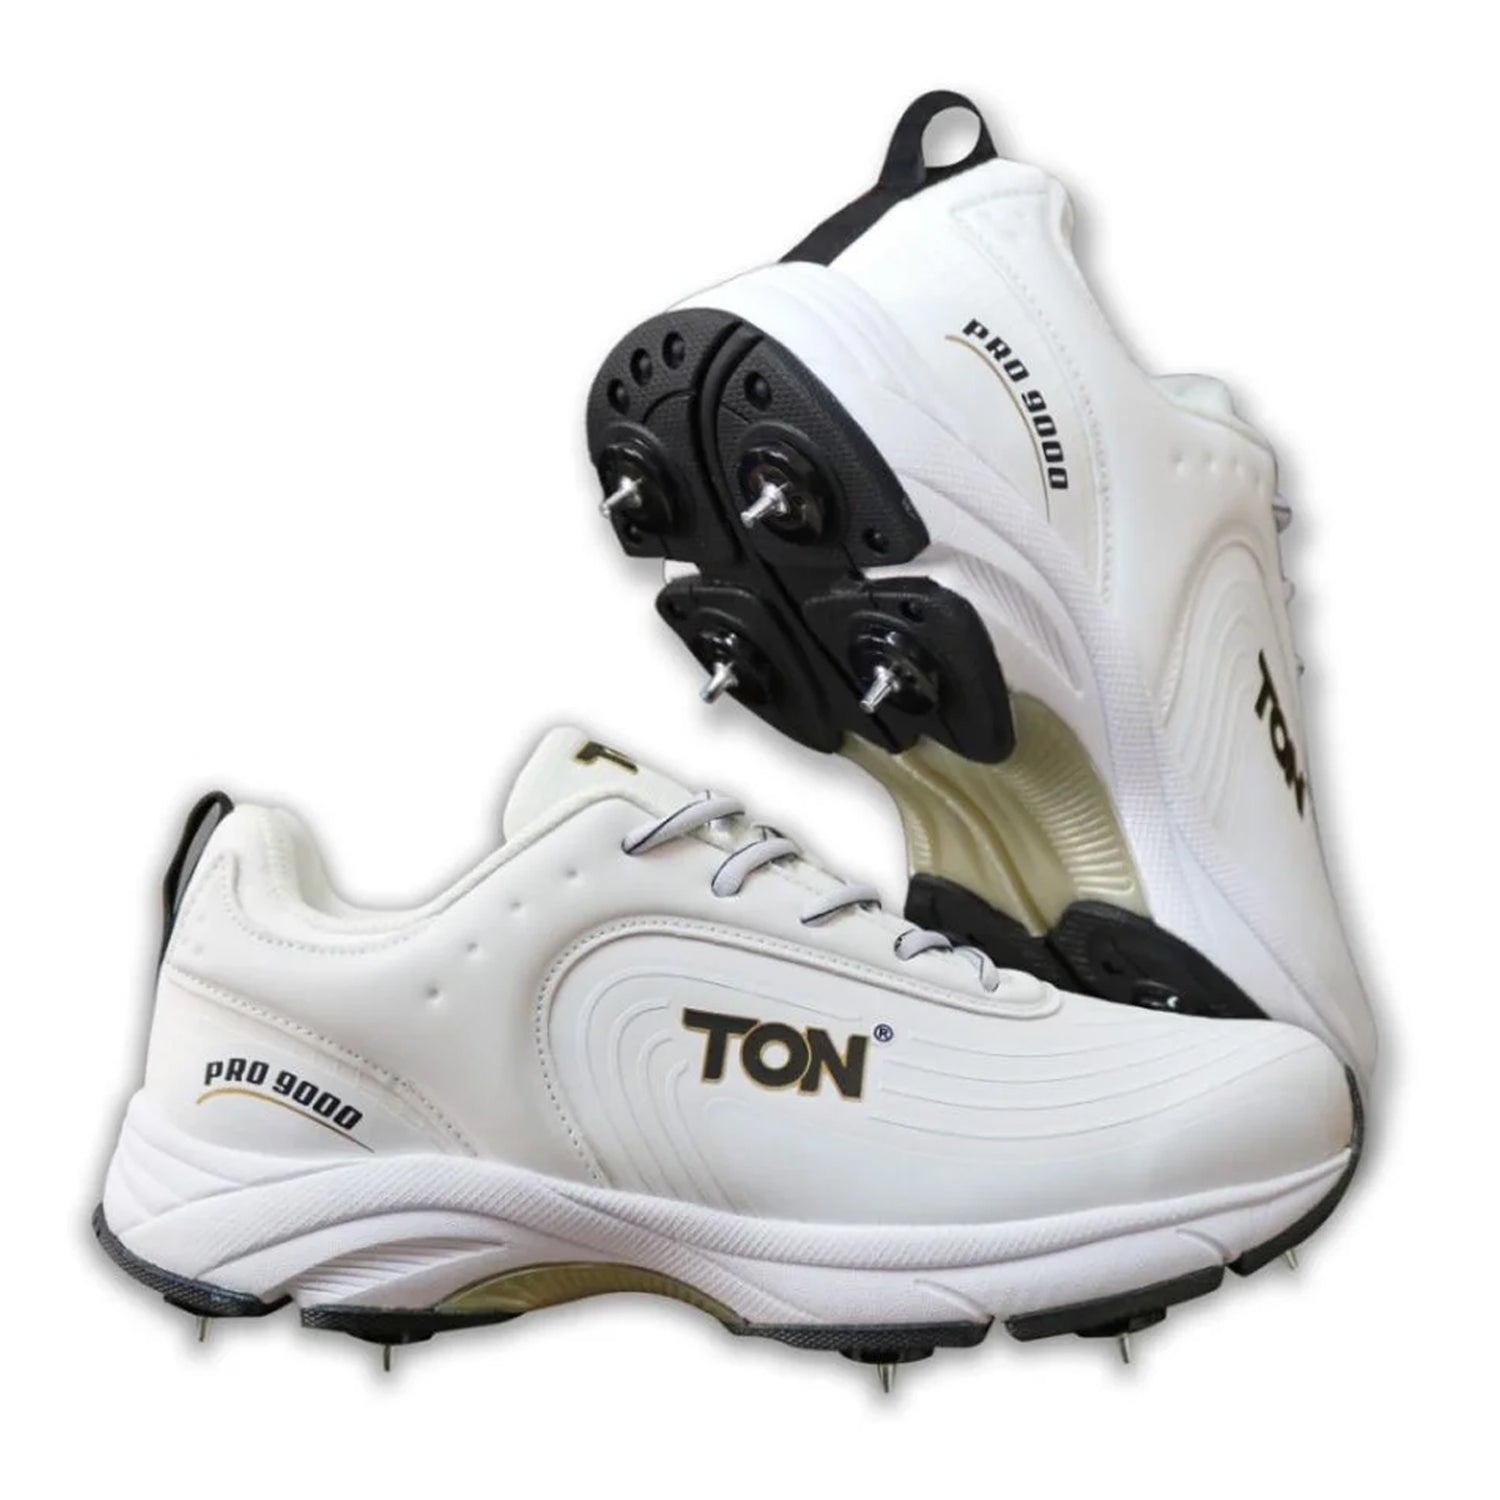 SS Ton Pro 9000 Cricket Spike Shoes, White/Black - Best Price online Prokicksports.com